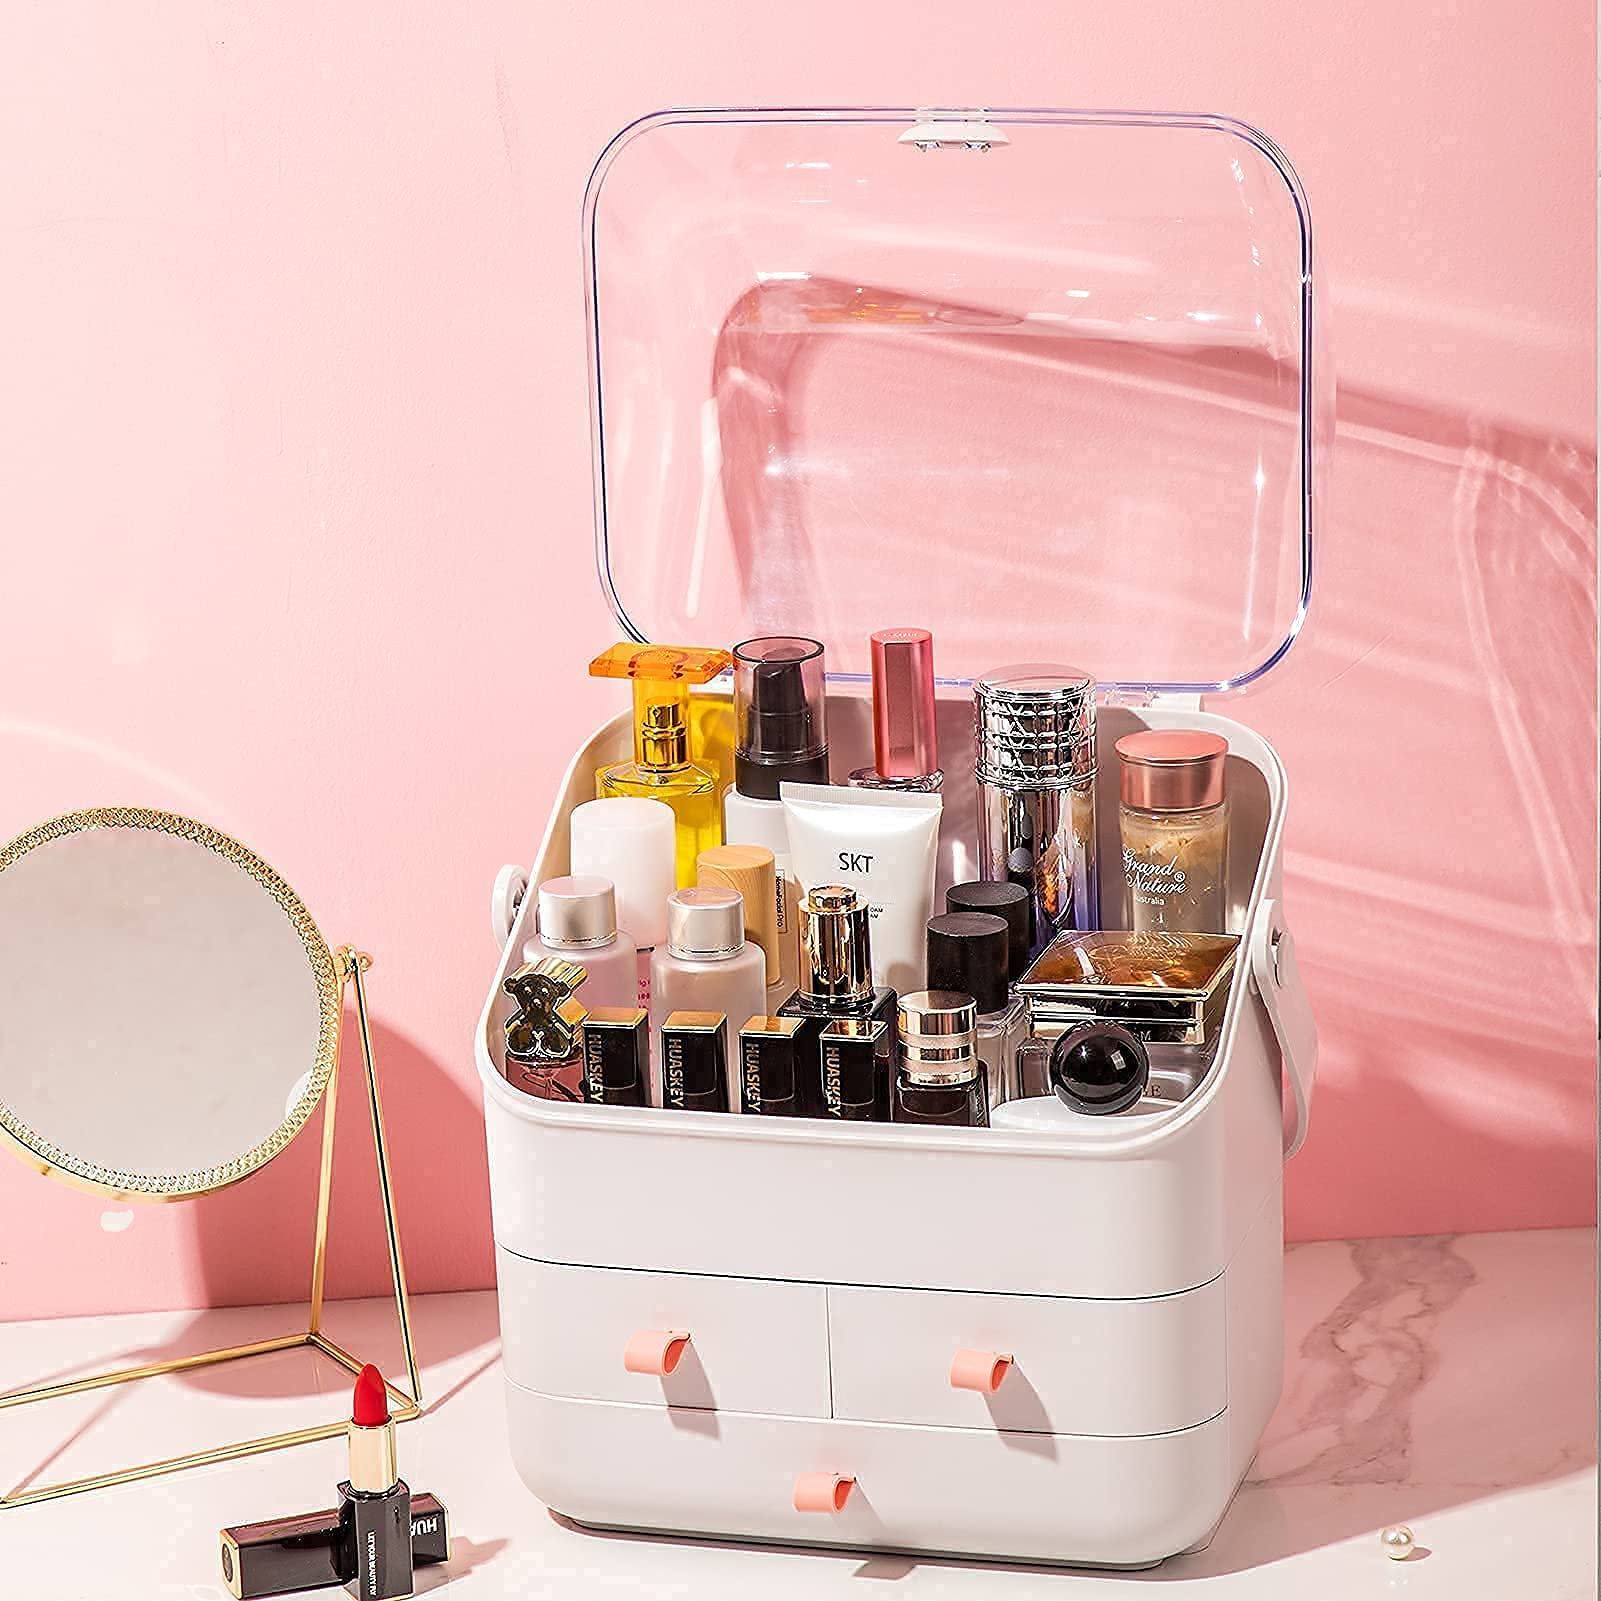 Haturi Makeup Organizer, Waterproof&Dustproof Cosmetic Organizer Box with Lid Fully Open Makeup Display Boxes, Skincare Organize